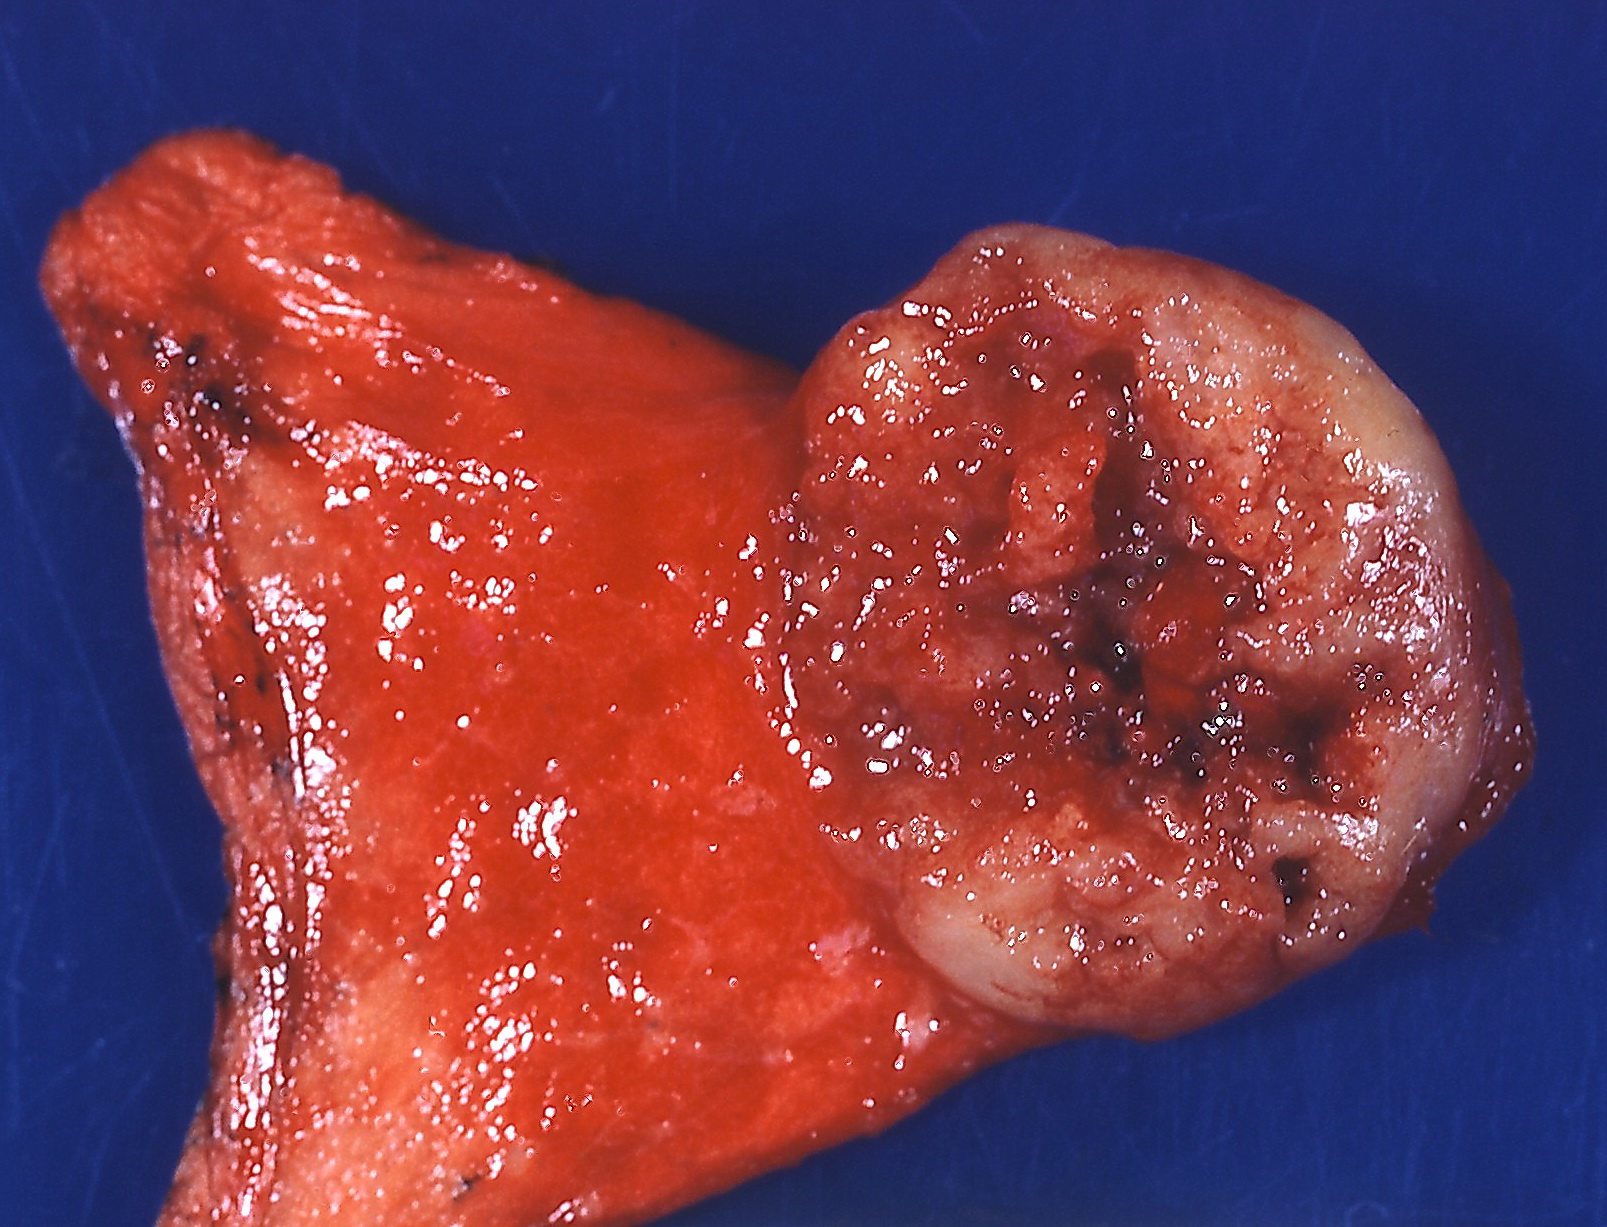 Gross pathology mucoepidermoid carcinoma.[1]